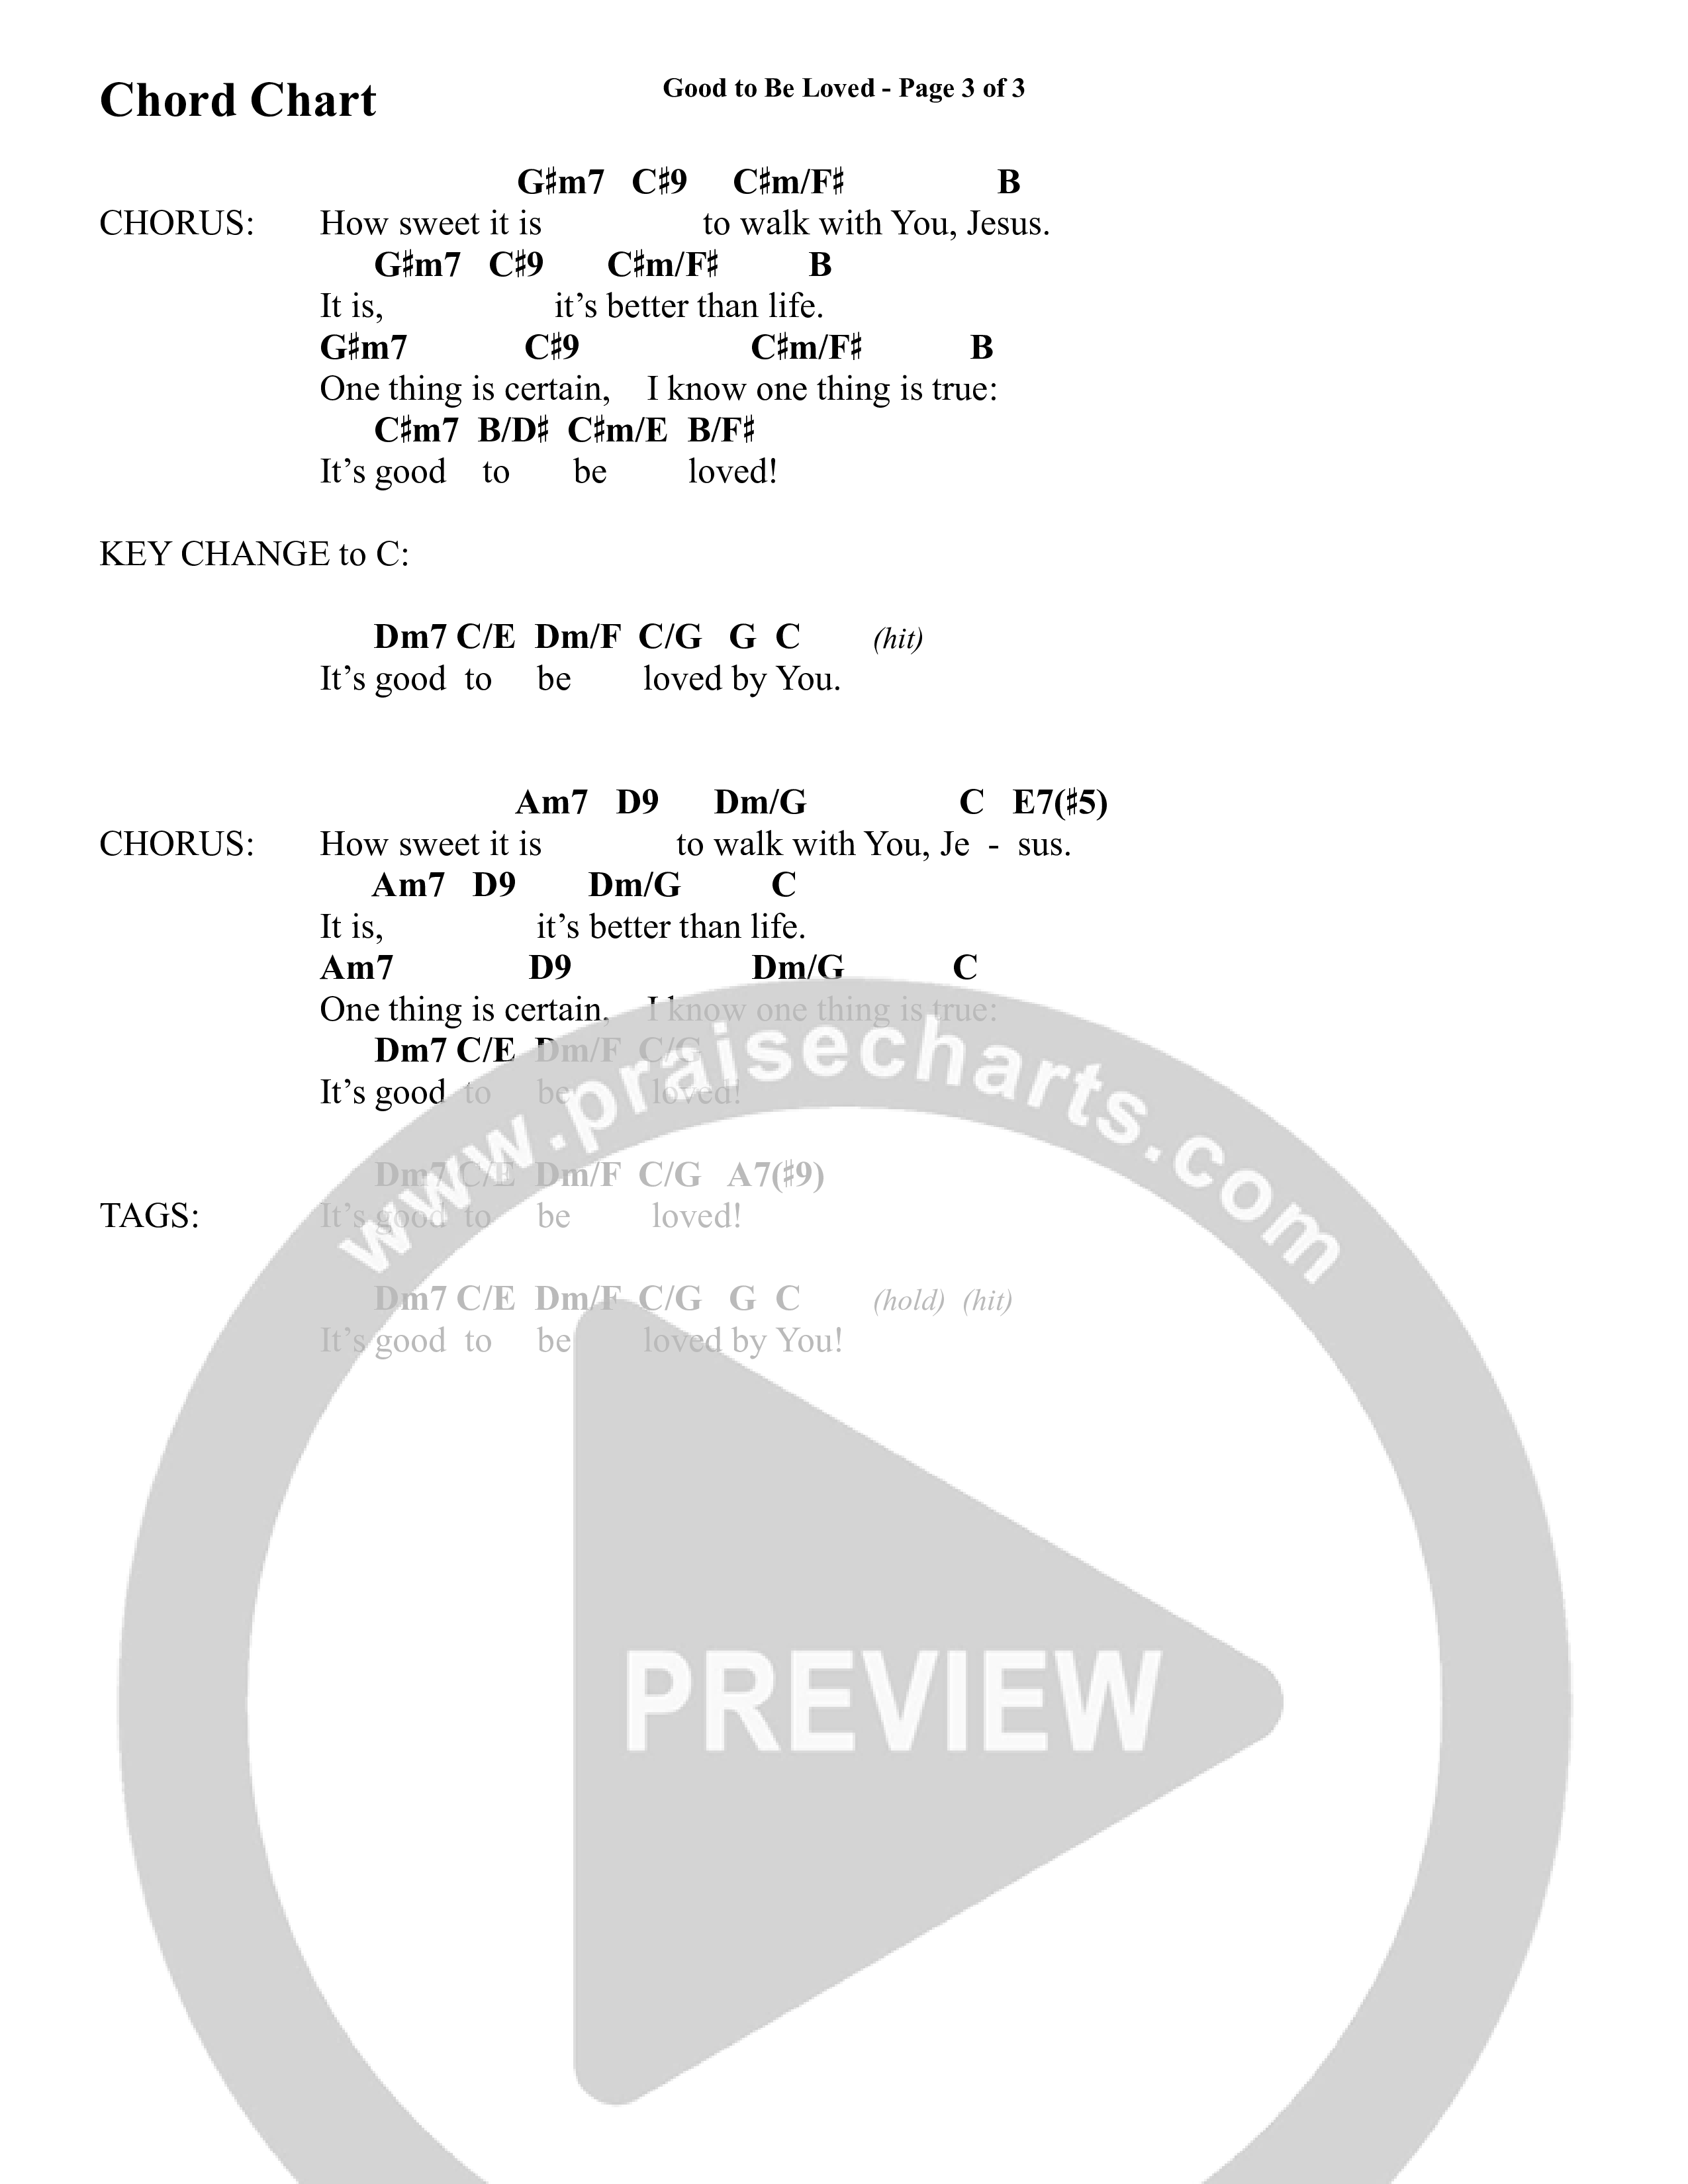 Good To Be Loved (Choral Anthem SATB) Chords & Lead Sheet (Semsen Music / Arr. Cliff Duren)